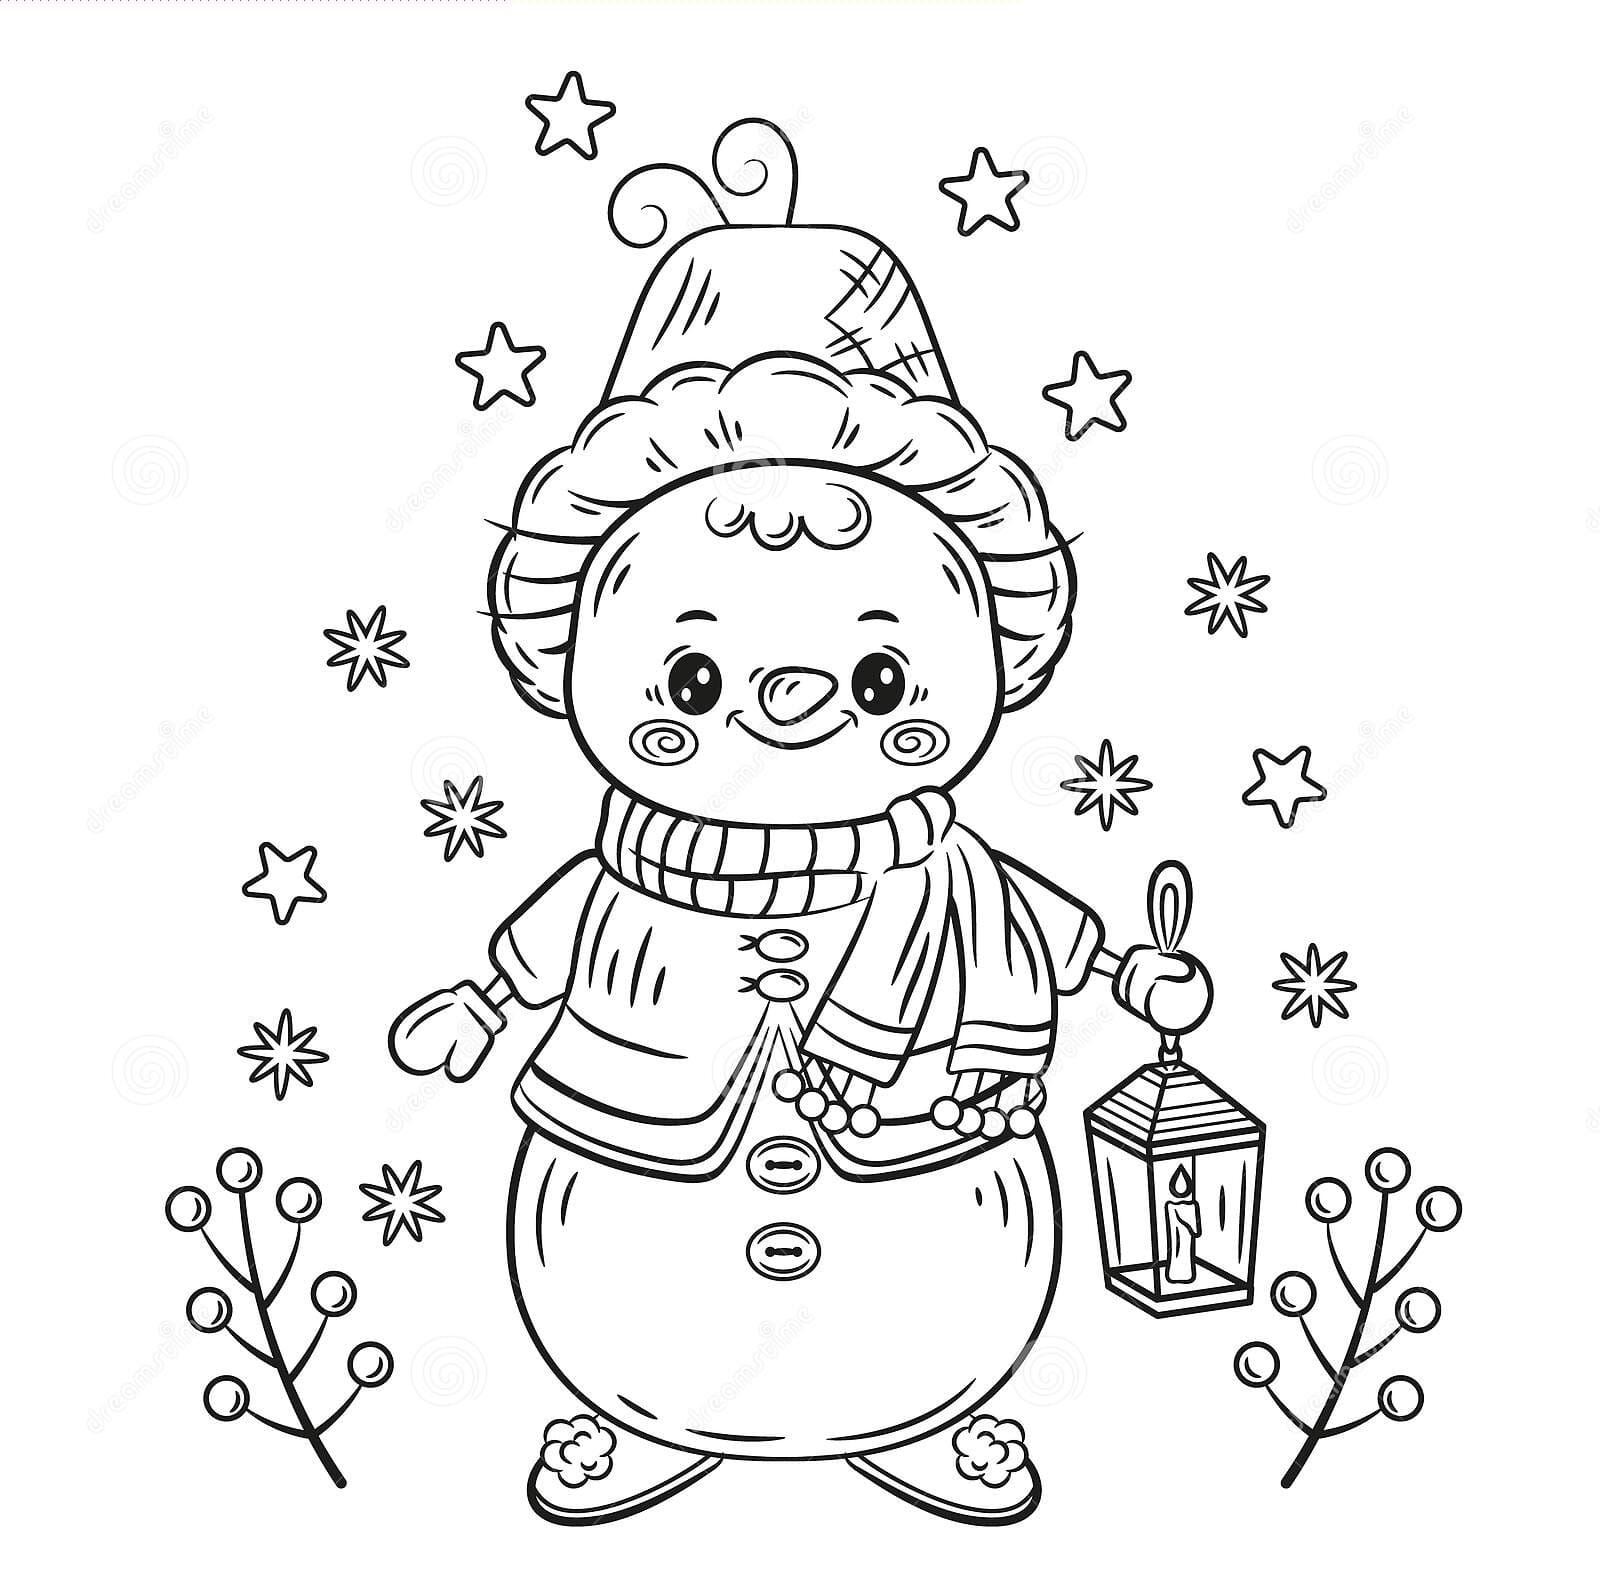 Cute Winter Snowman Christmas Children Image